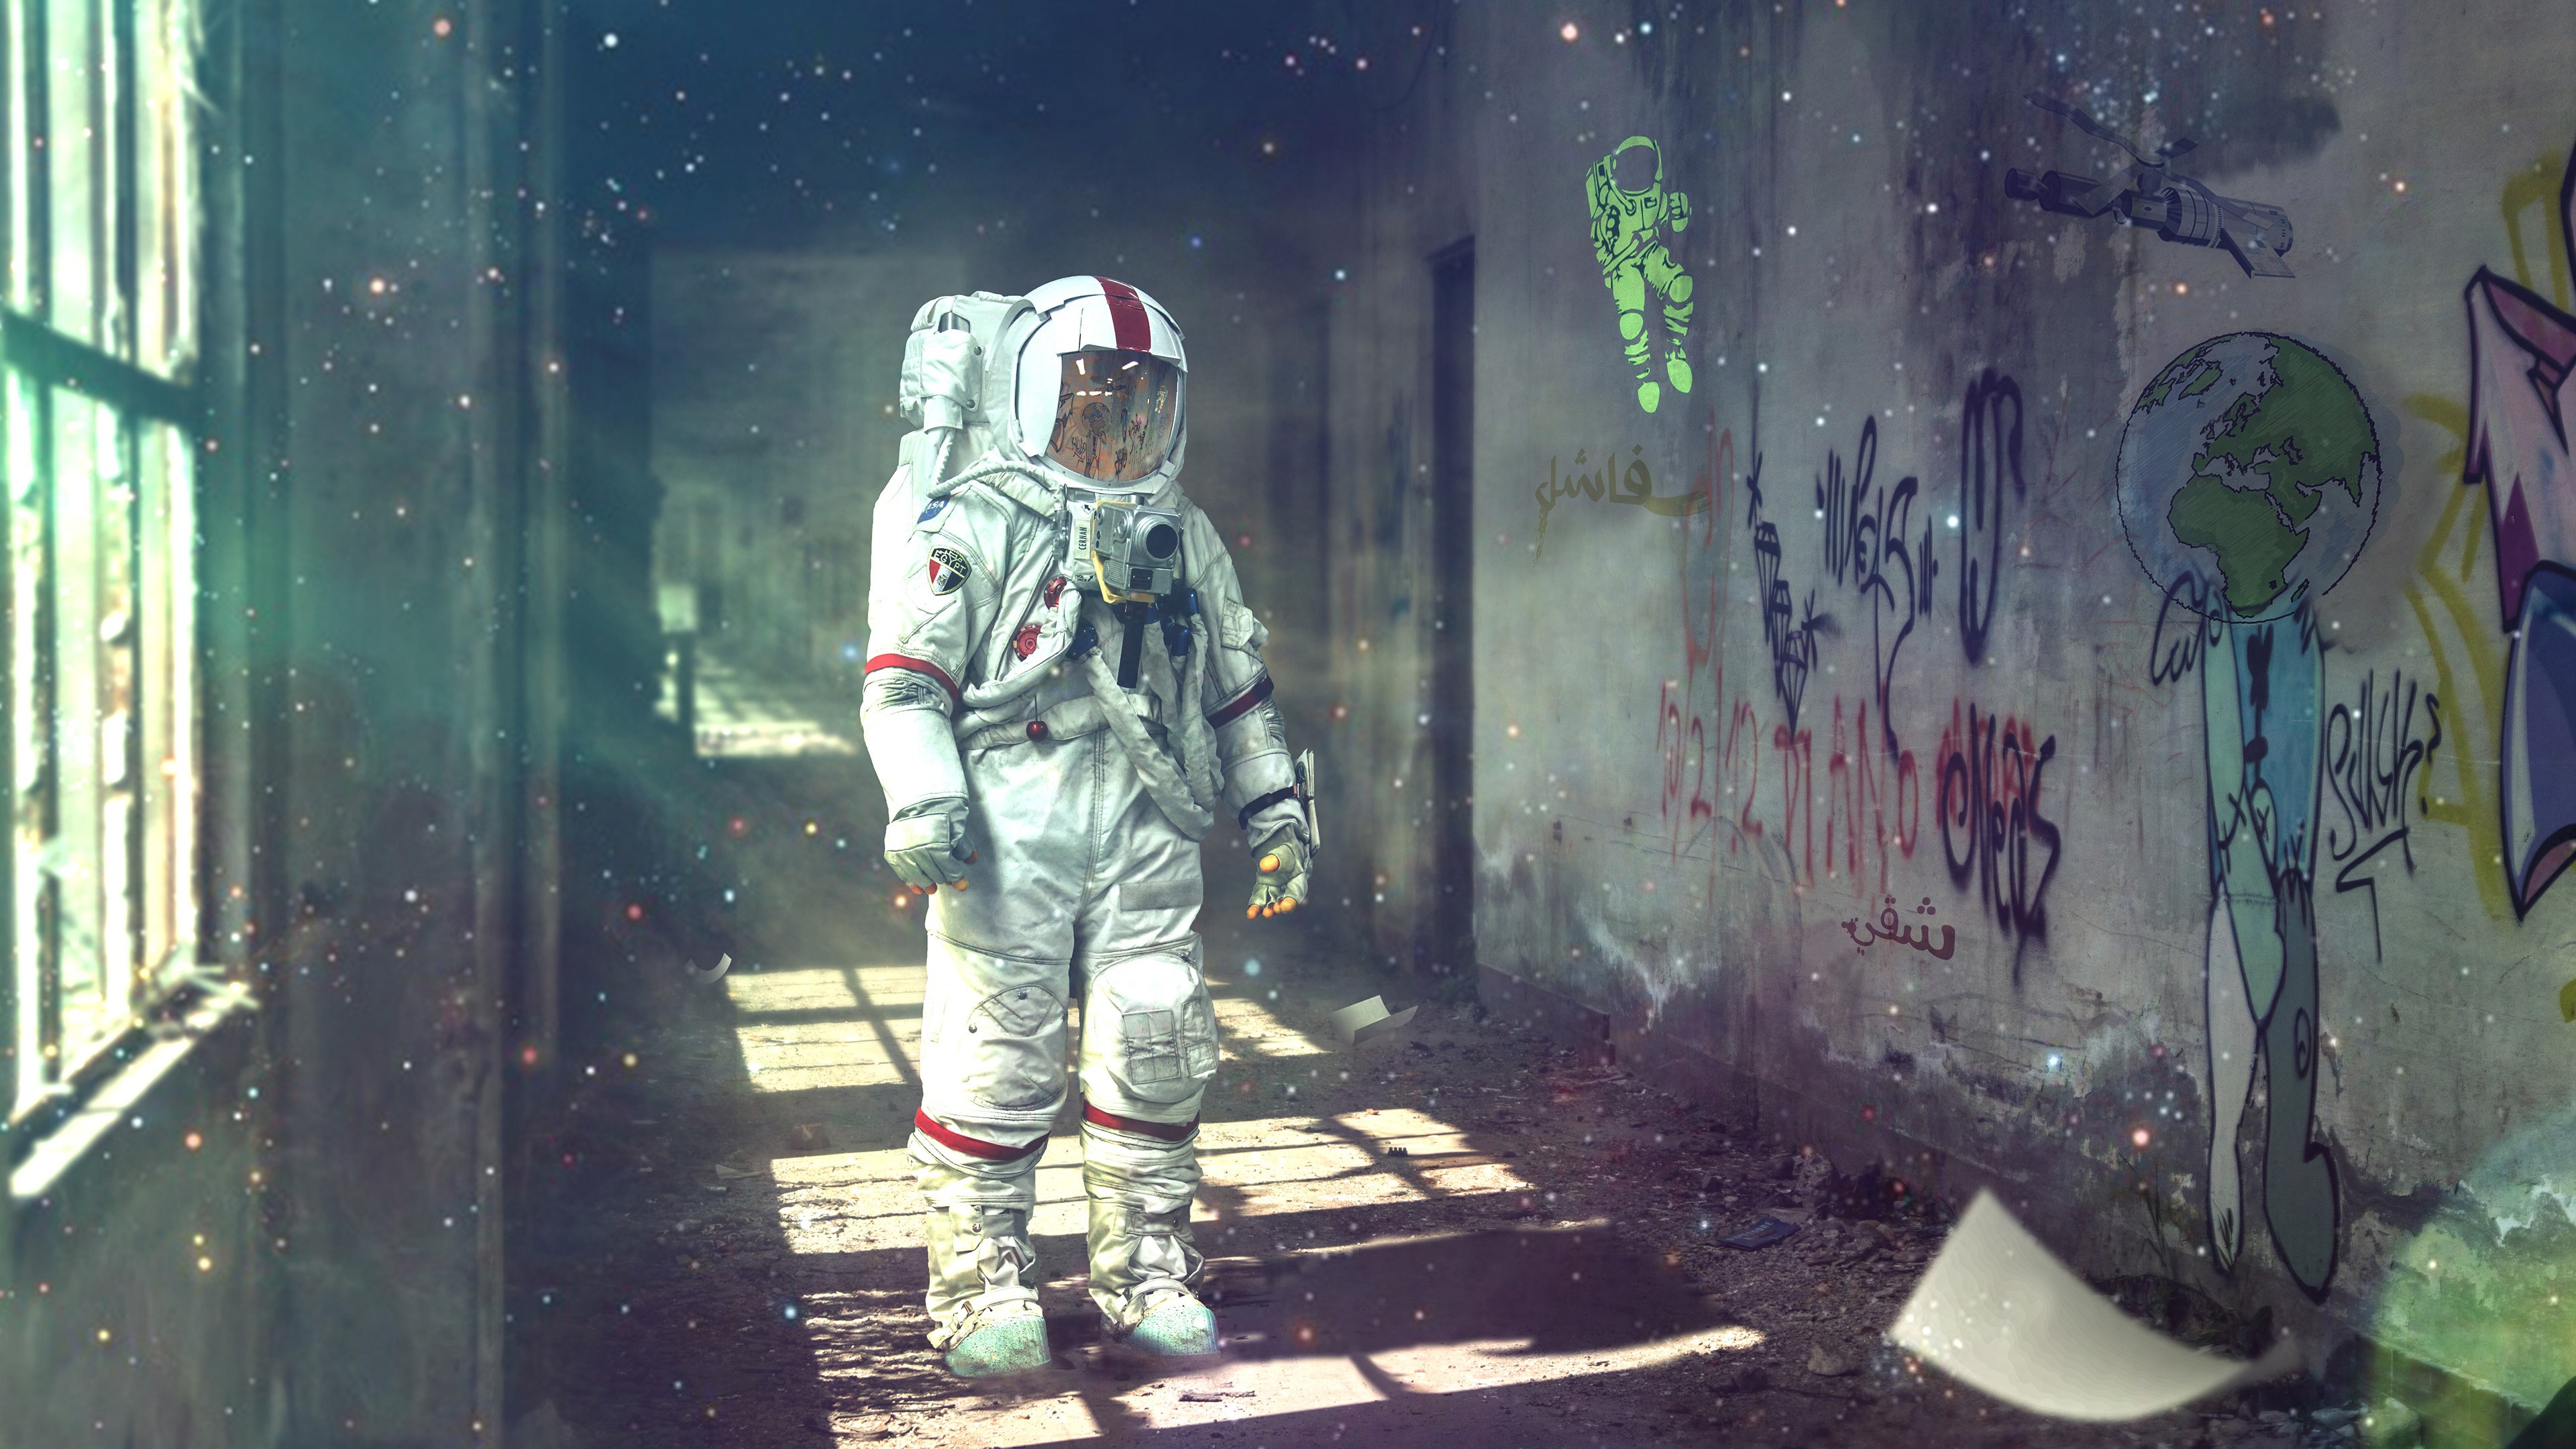 HD Wallpaper for theme: astronaut HD wallpaper, background